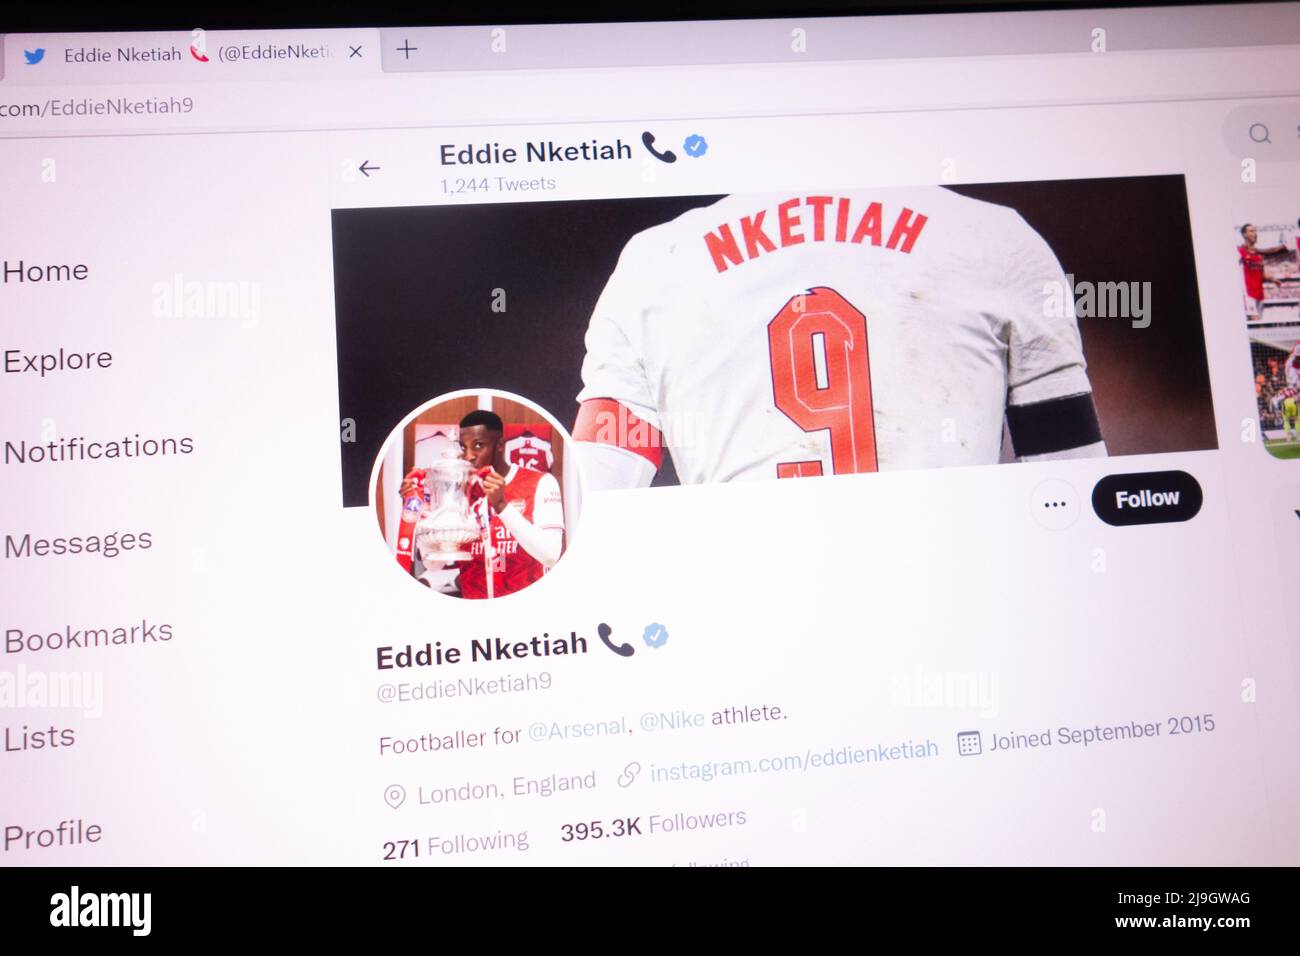 KONSKIE, POLAND - May 21, 2022: Eddie Nketiah official Twitter account displayed on laptop screen Stock Photo